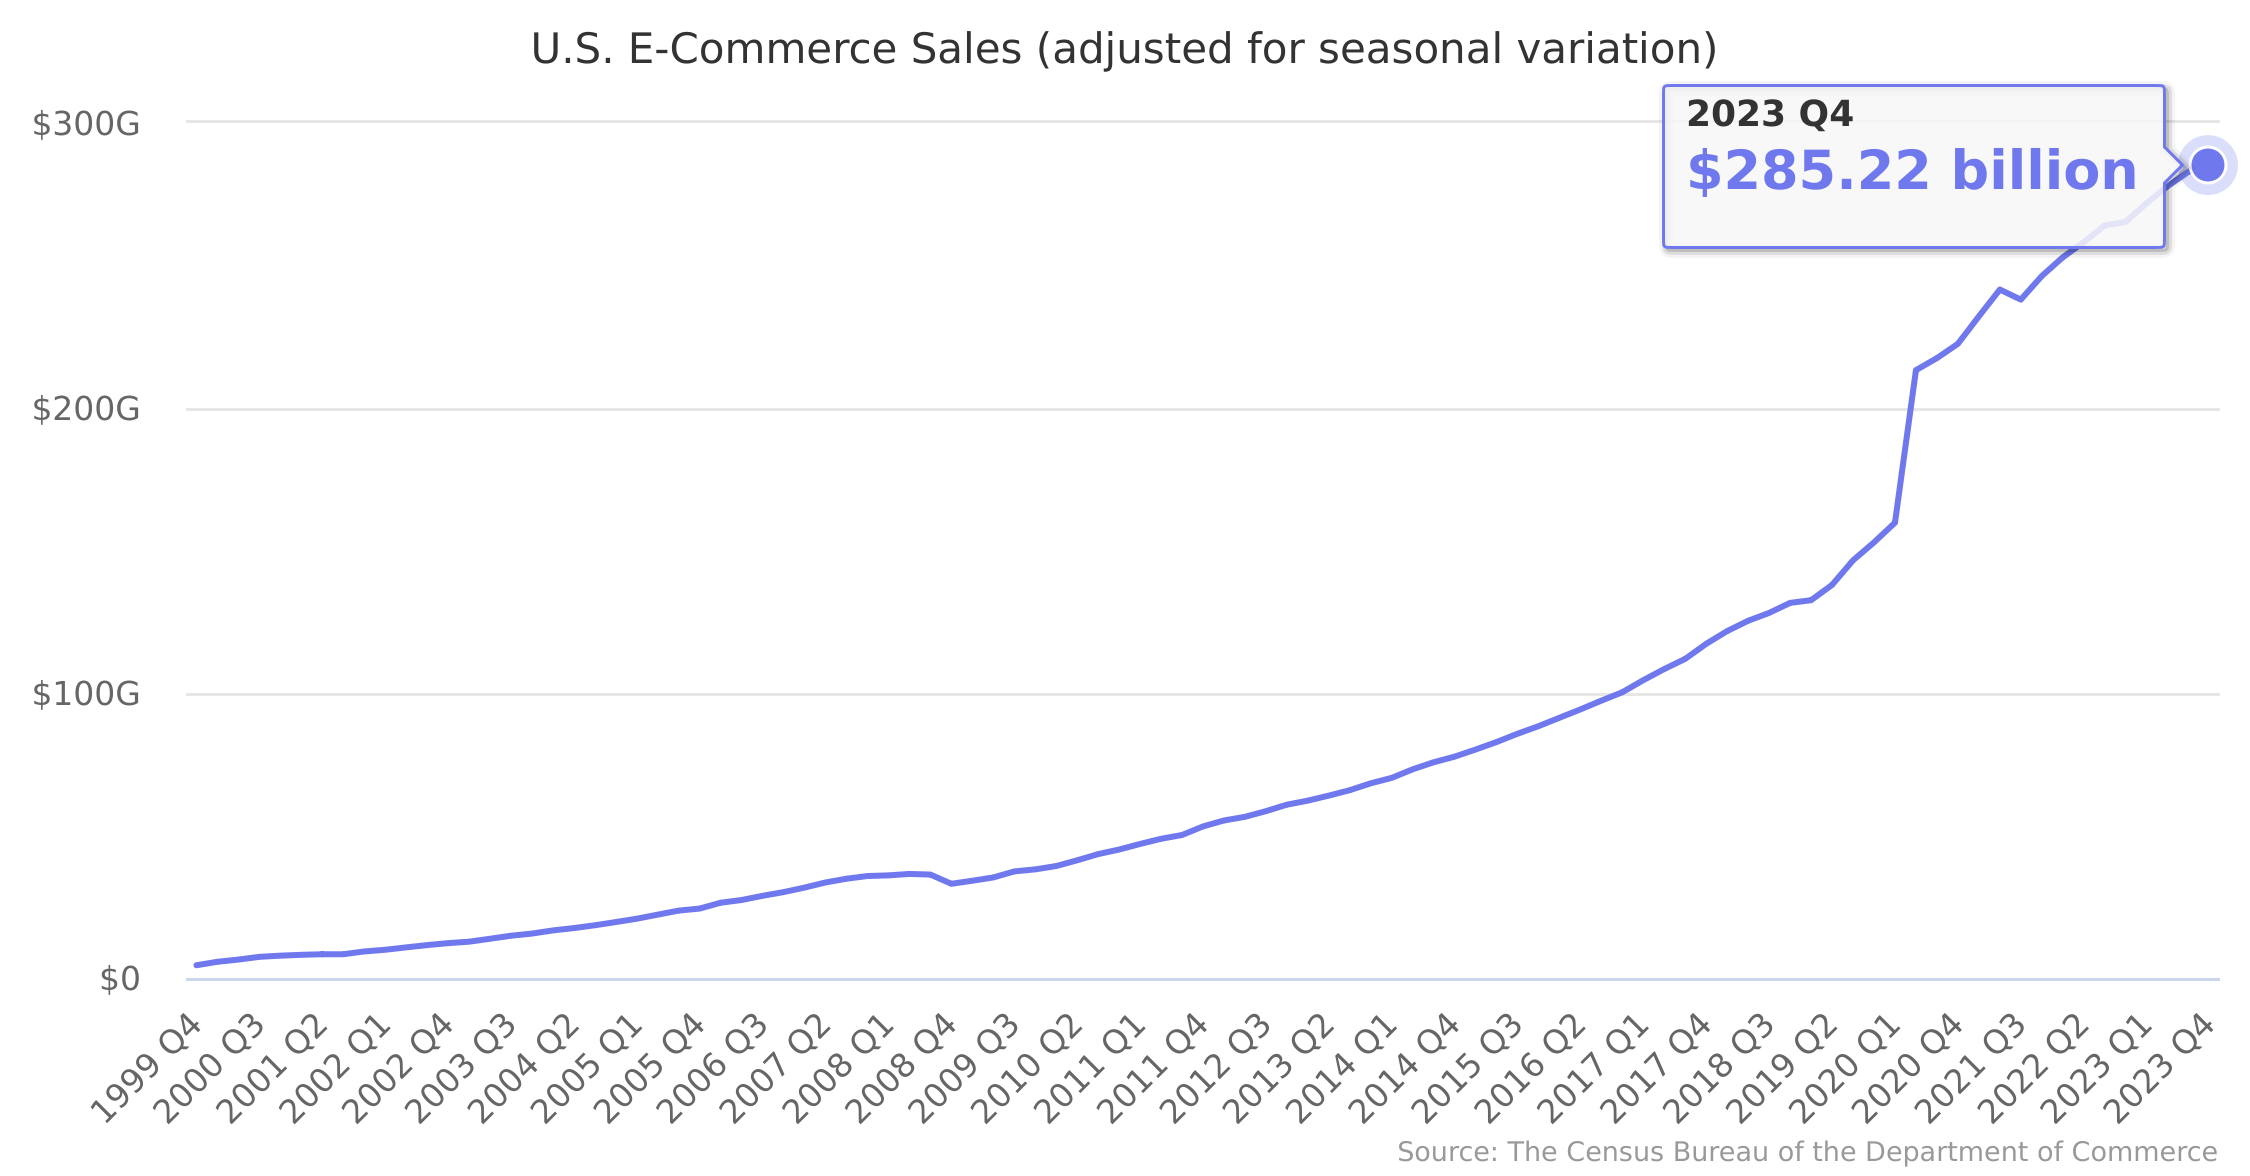 U.S. E-Commerce Sales 1999-2023